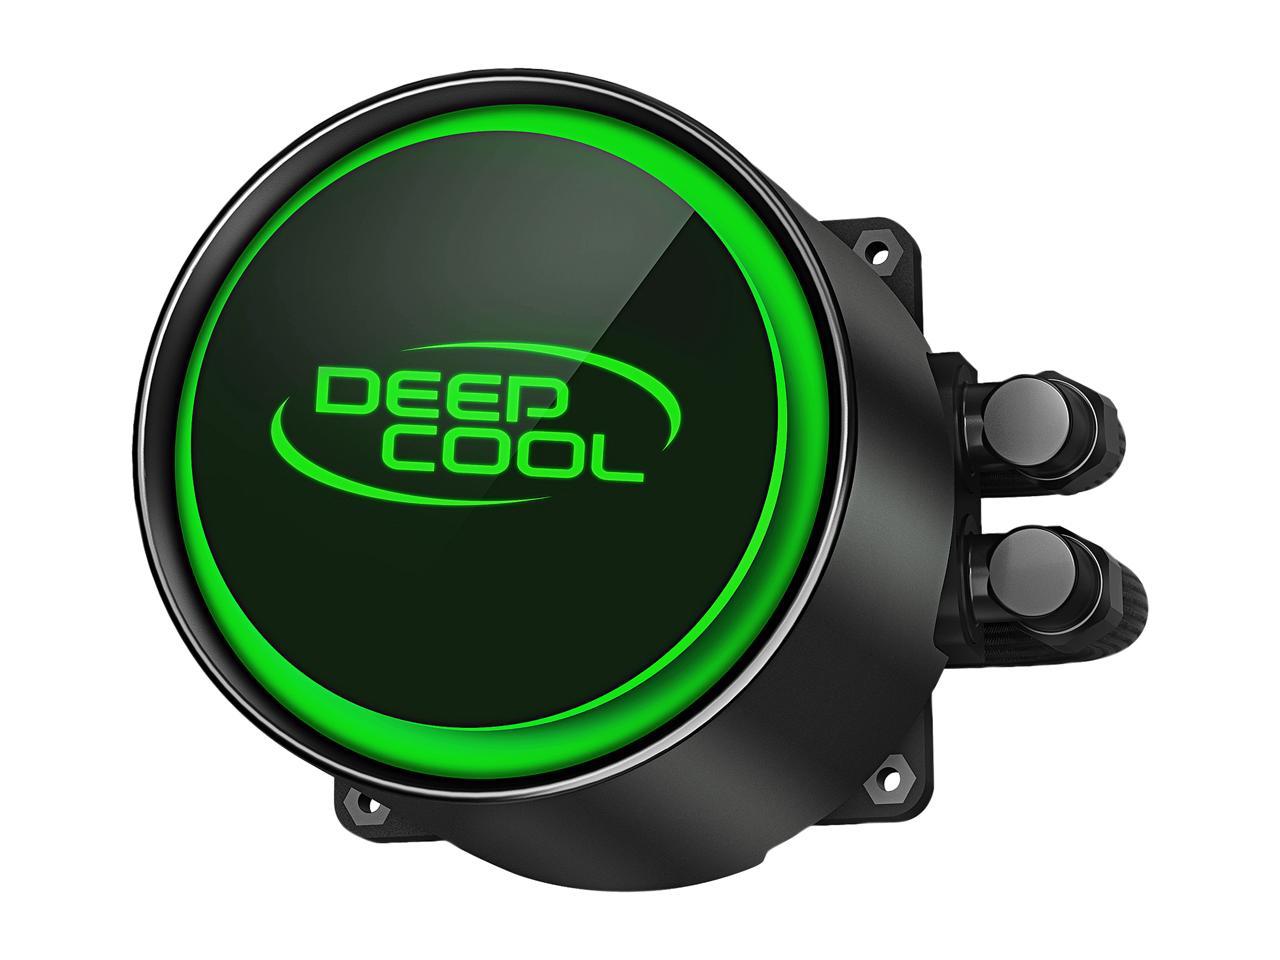 Deepcool Castle 120R Aio Liquid Cpu Cooler, Anti-Leak Technology, 120Mm Rgb Pwm Fan, 12V 4-Pin Motherboard Connector, Intel 115X/ 1200/ 2066, Amd Am4